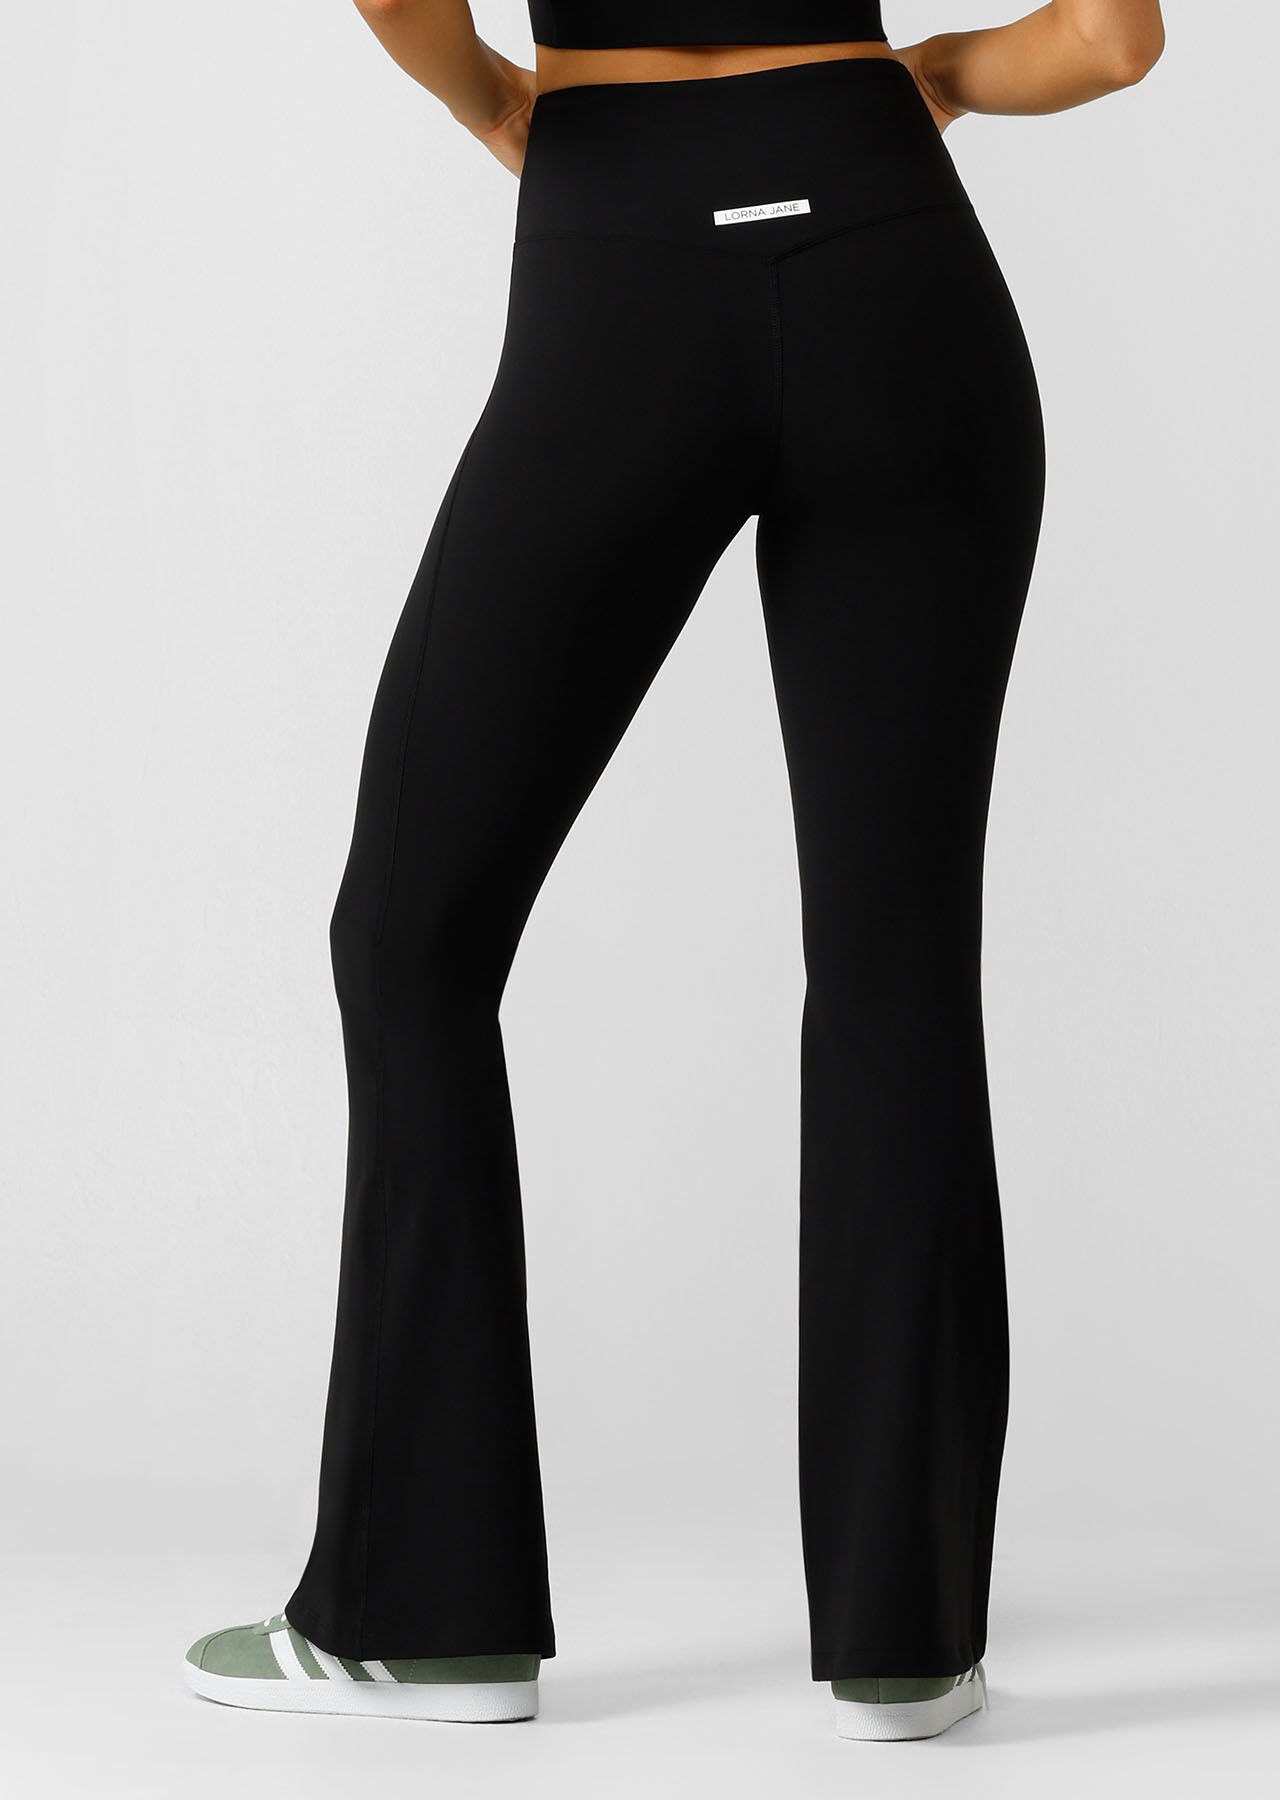 Halara High Waisted Back Pocket Plain Slight Flare Leggings - Deep Sage -  XS gym leggings leggings with pockets leggings … | Flare leggings, Flares,  One piece dress